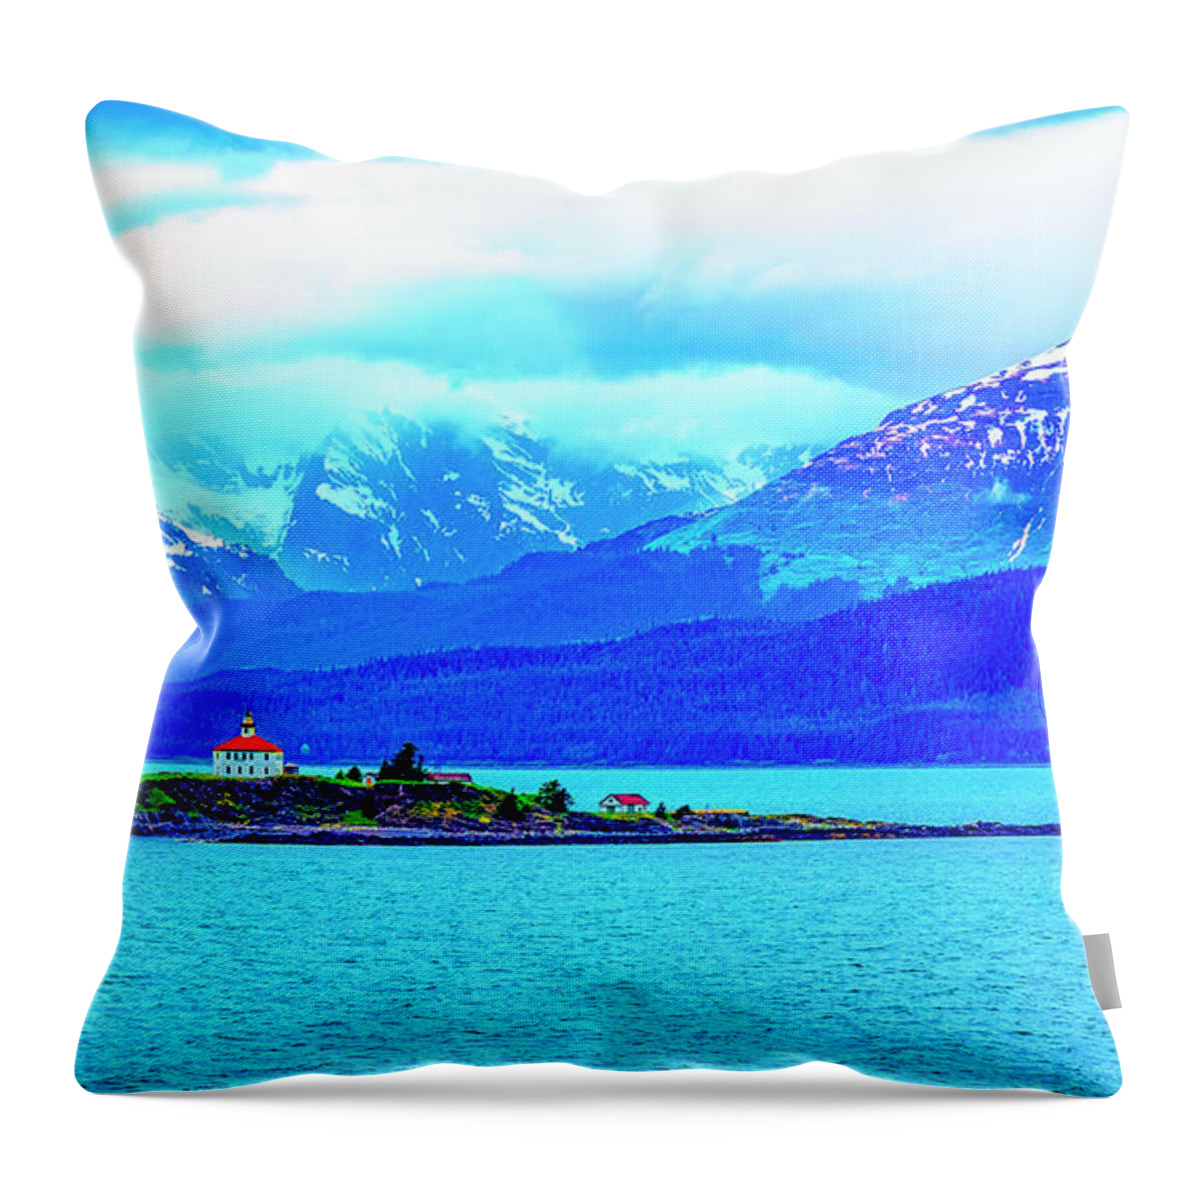 Inside Passage Throw Pillow featuring the digital art Alaska Inside Passage by SnapHappy Photos